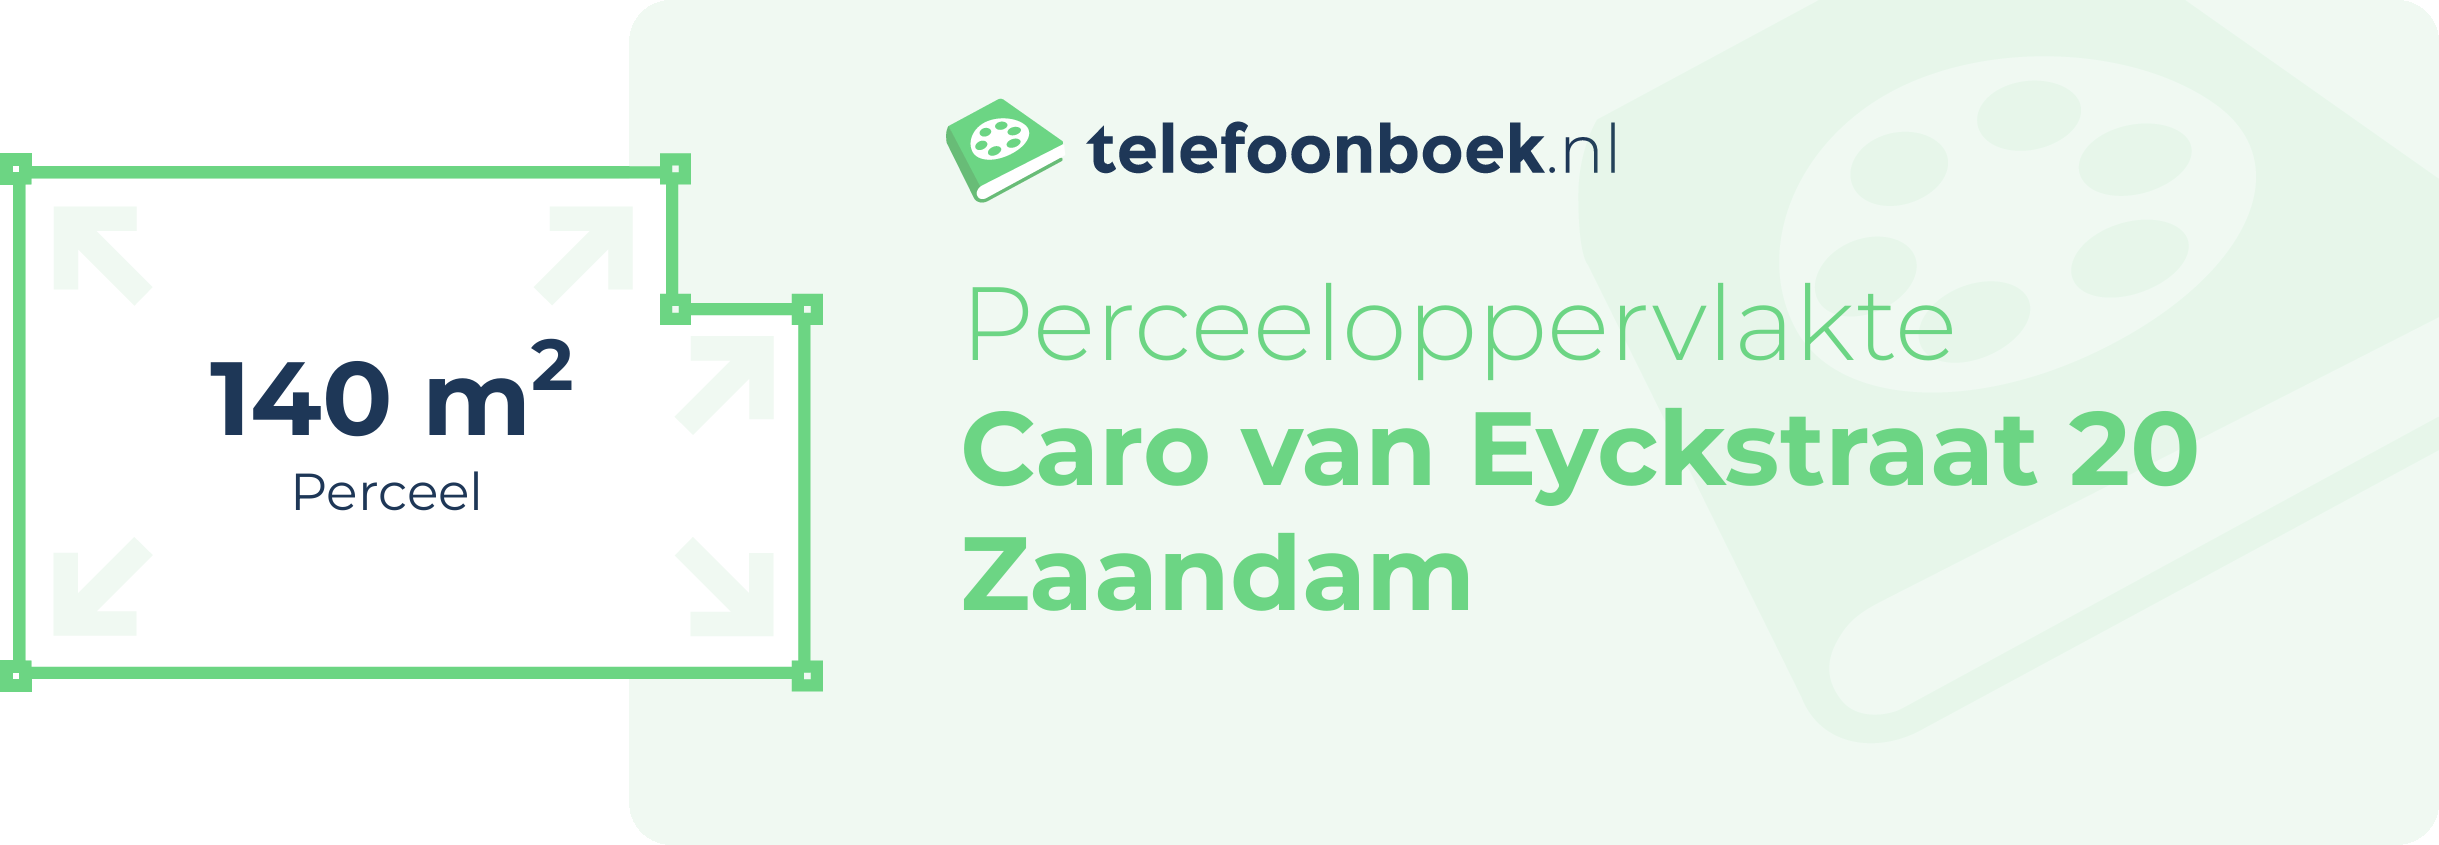 Perceeloppervlakte Caro Van Eyckstraat 20 Zaandam